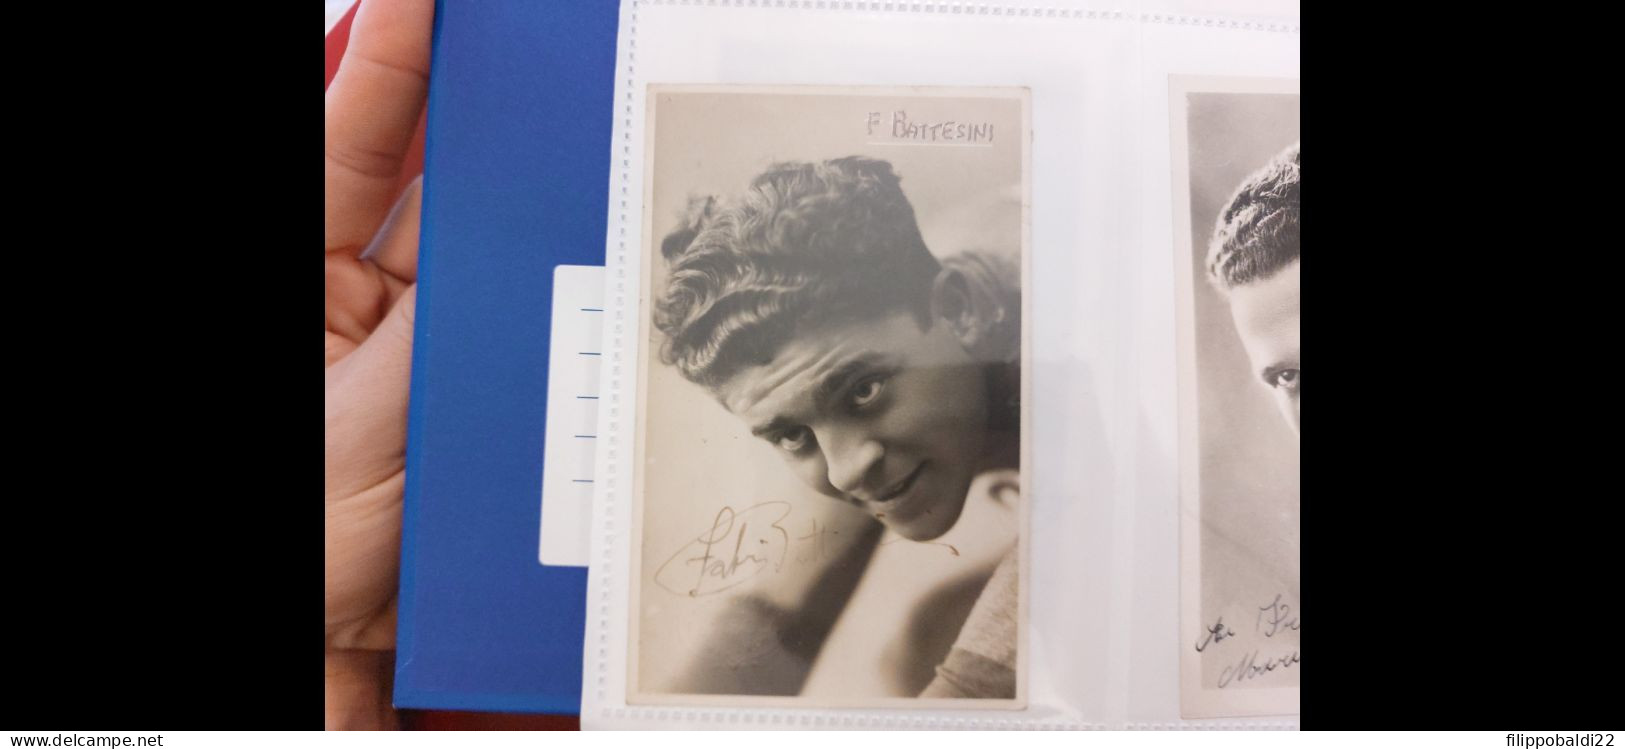 Fabio Battesini 10x15 Autografo Autograph Signed - Cyclisme